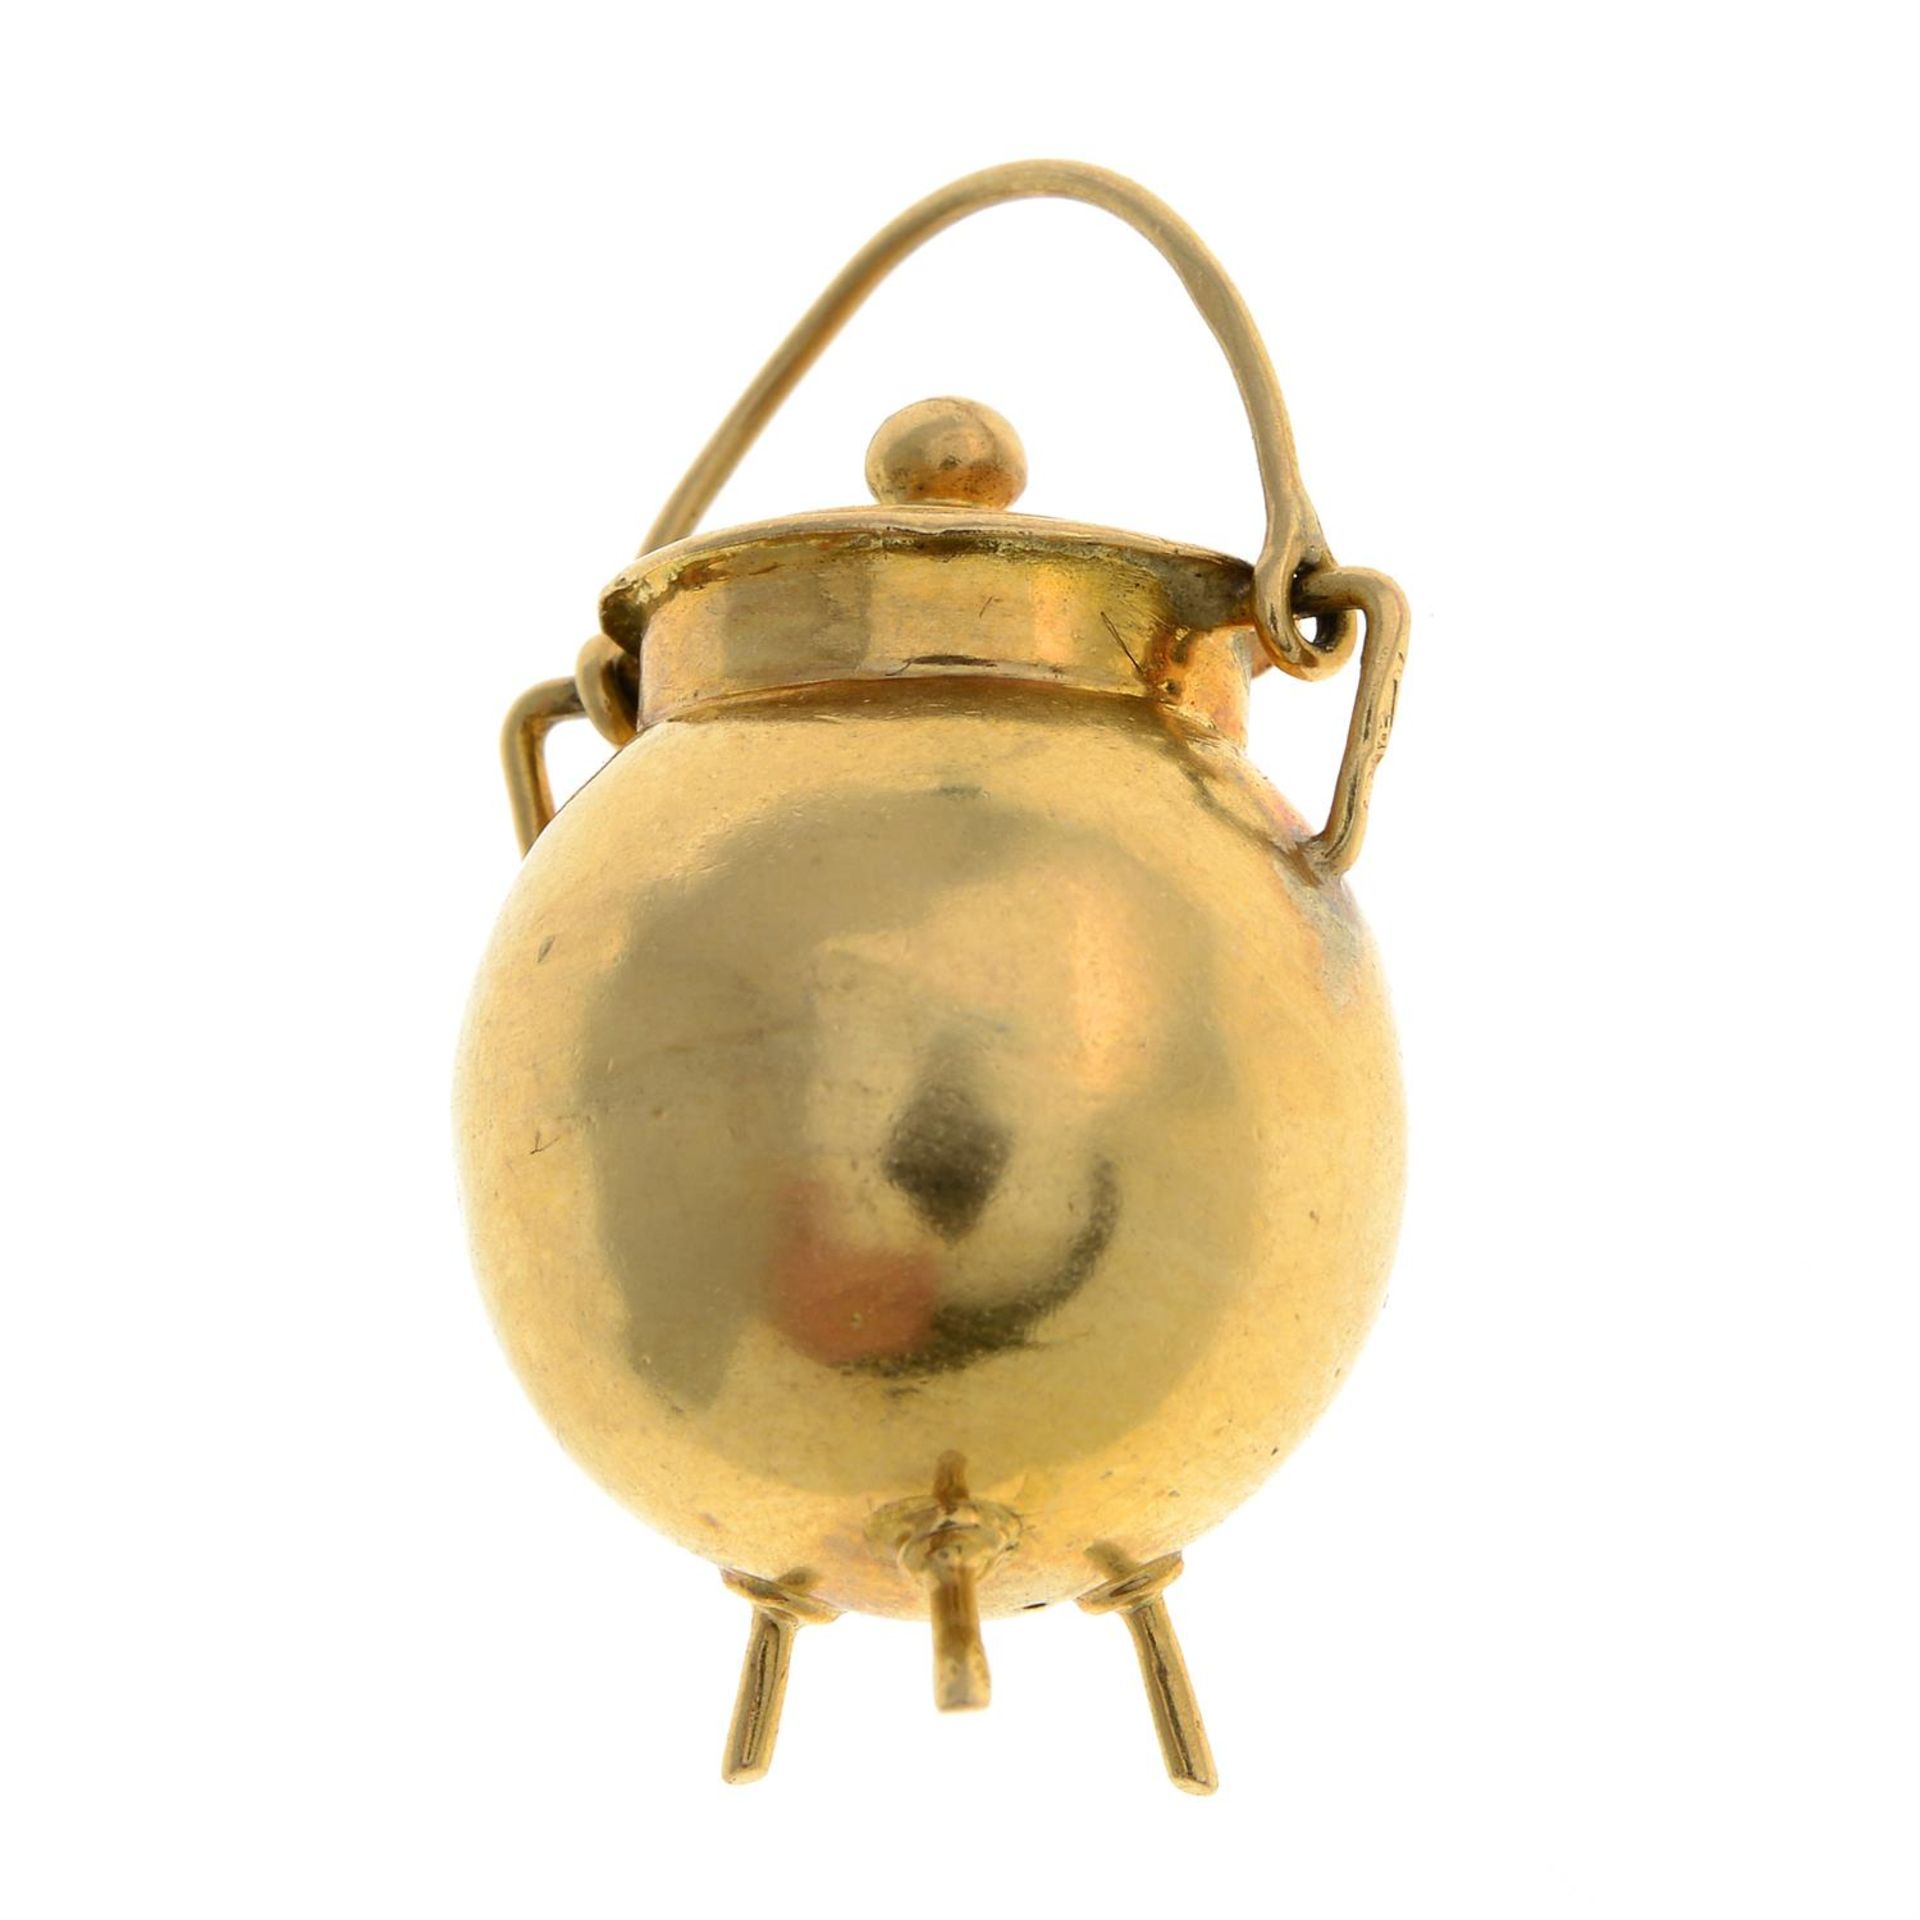 A pot pendant. - Image 2 of 2